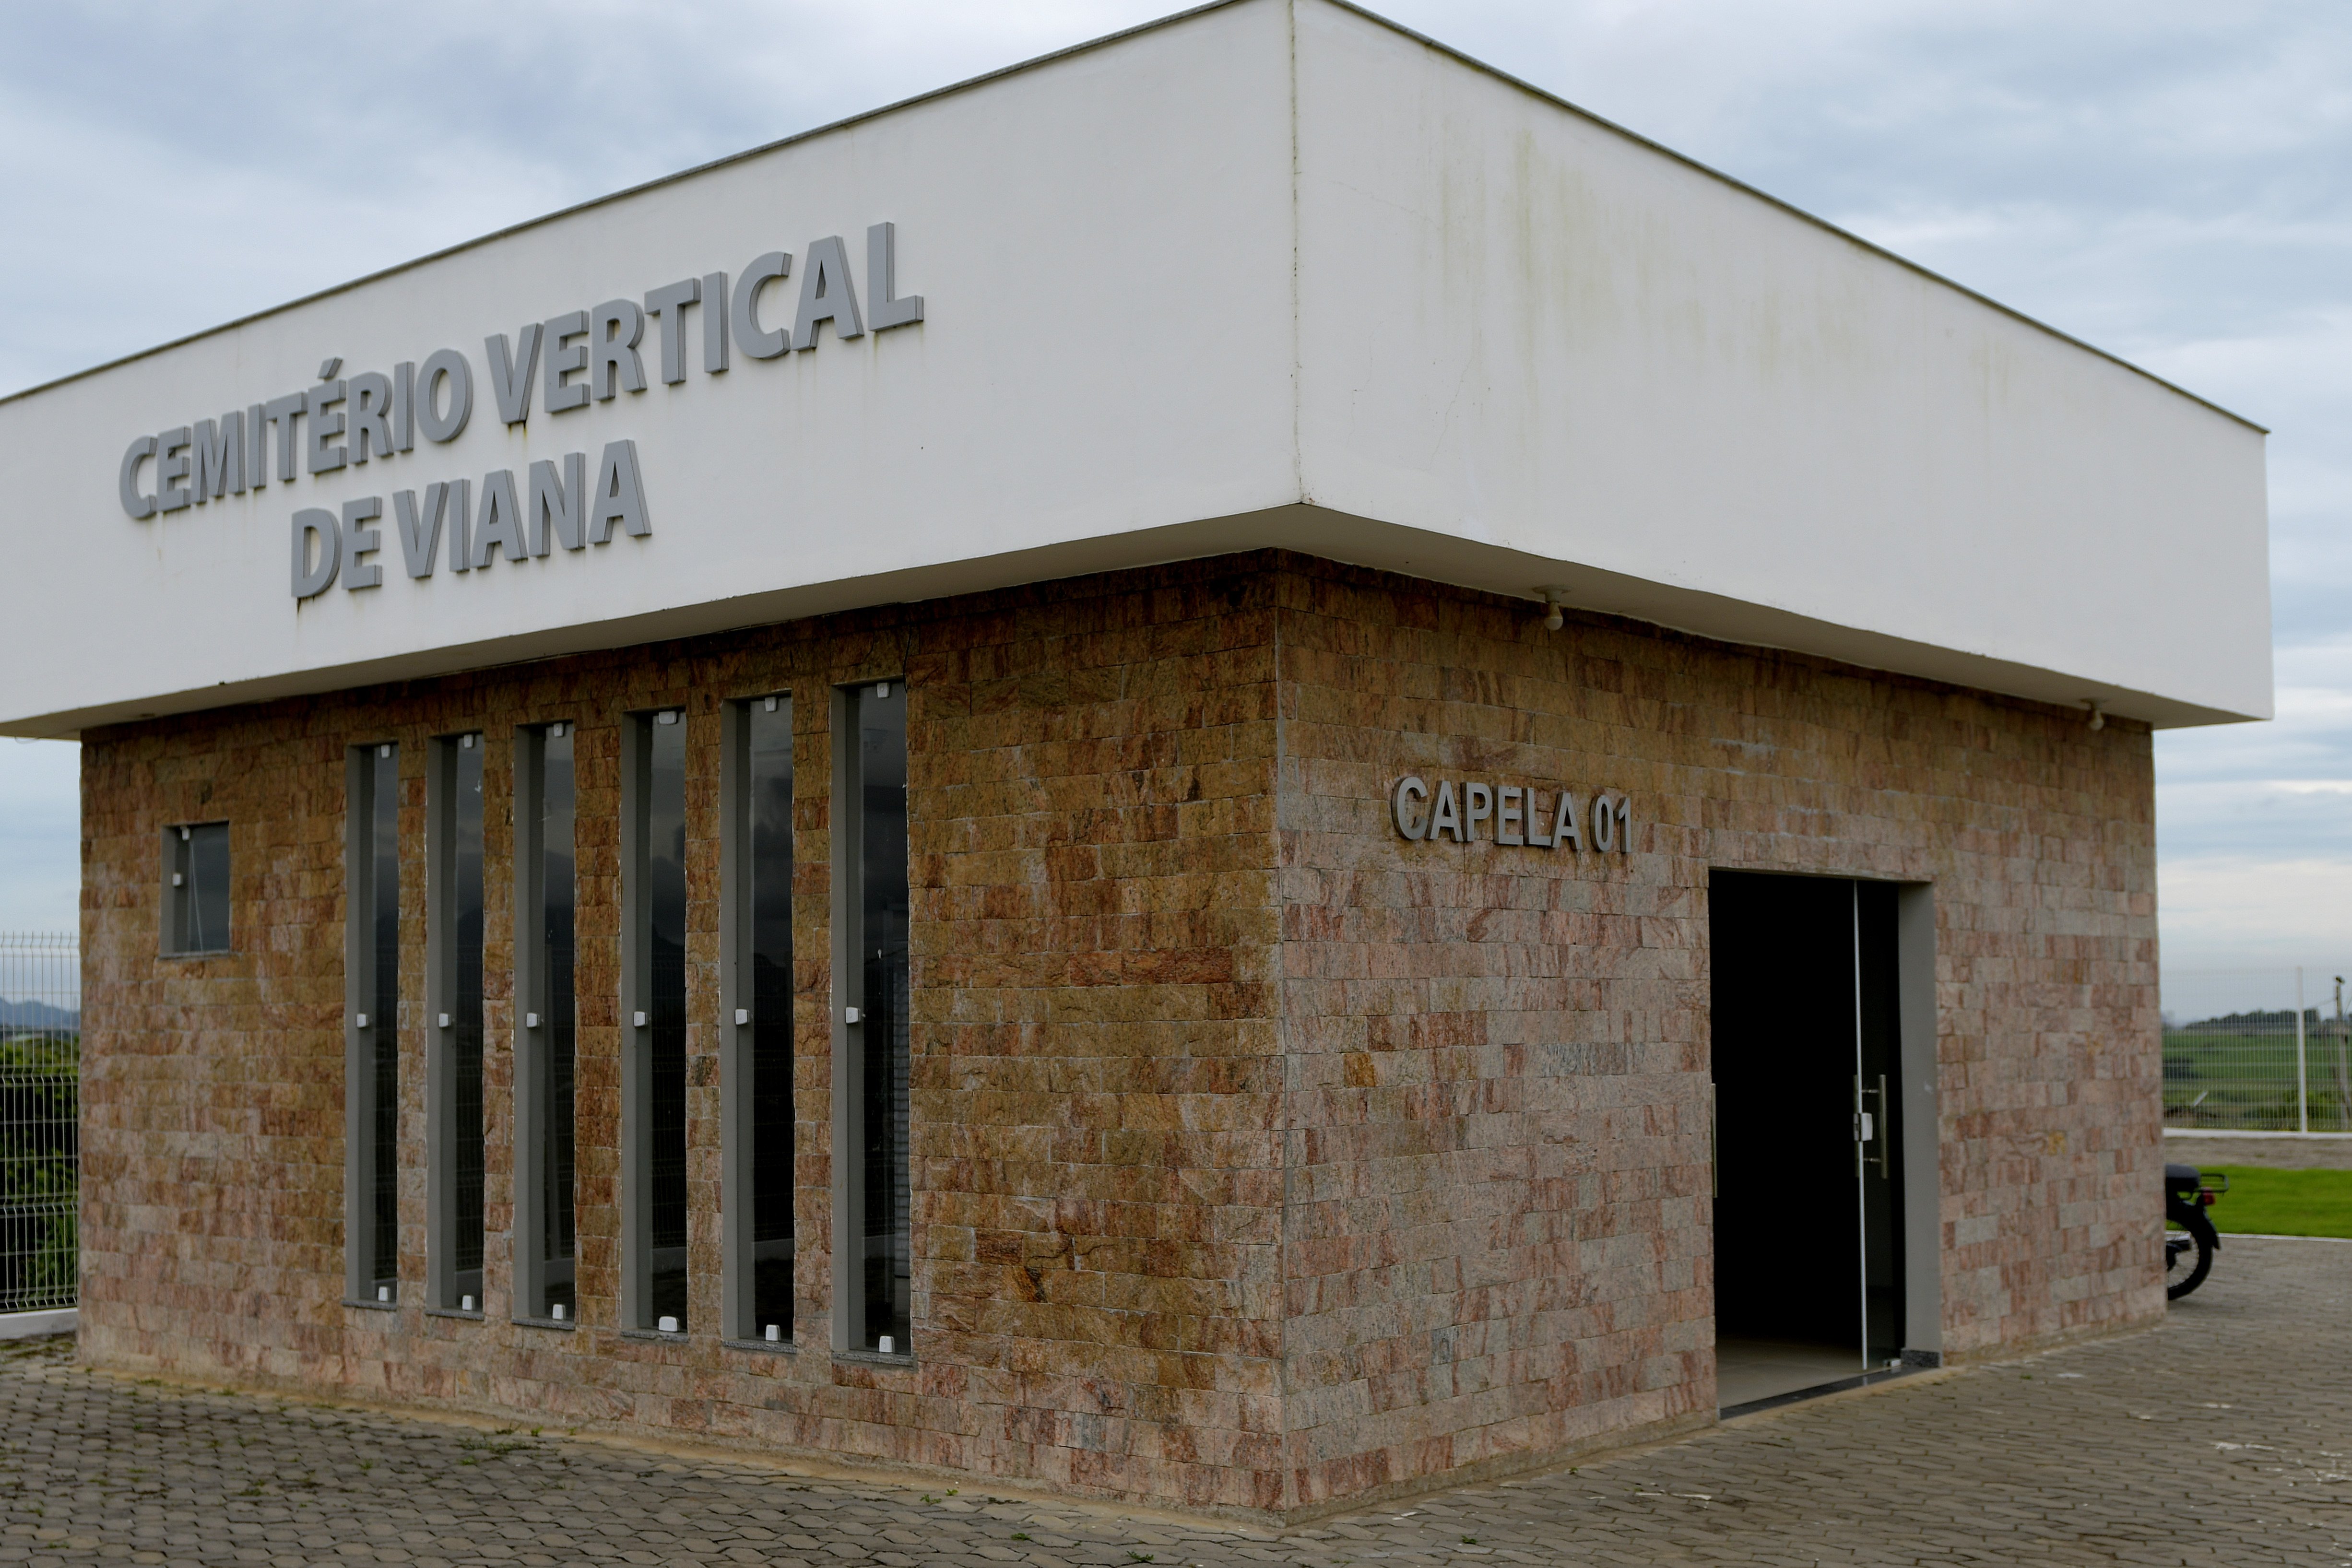 Cemitério vertical de Viana